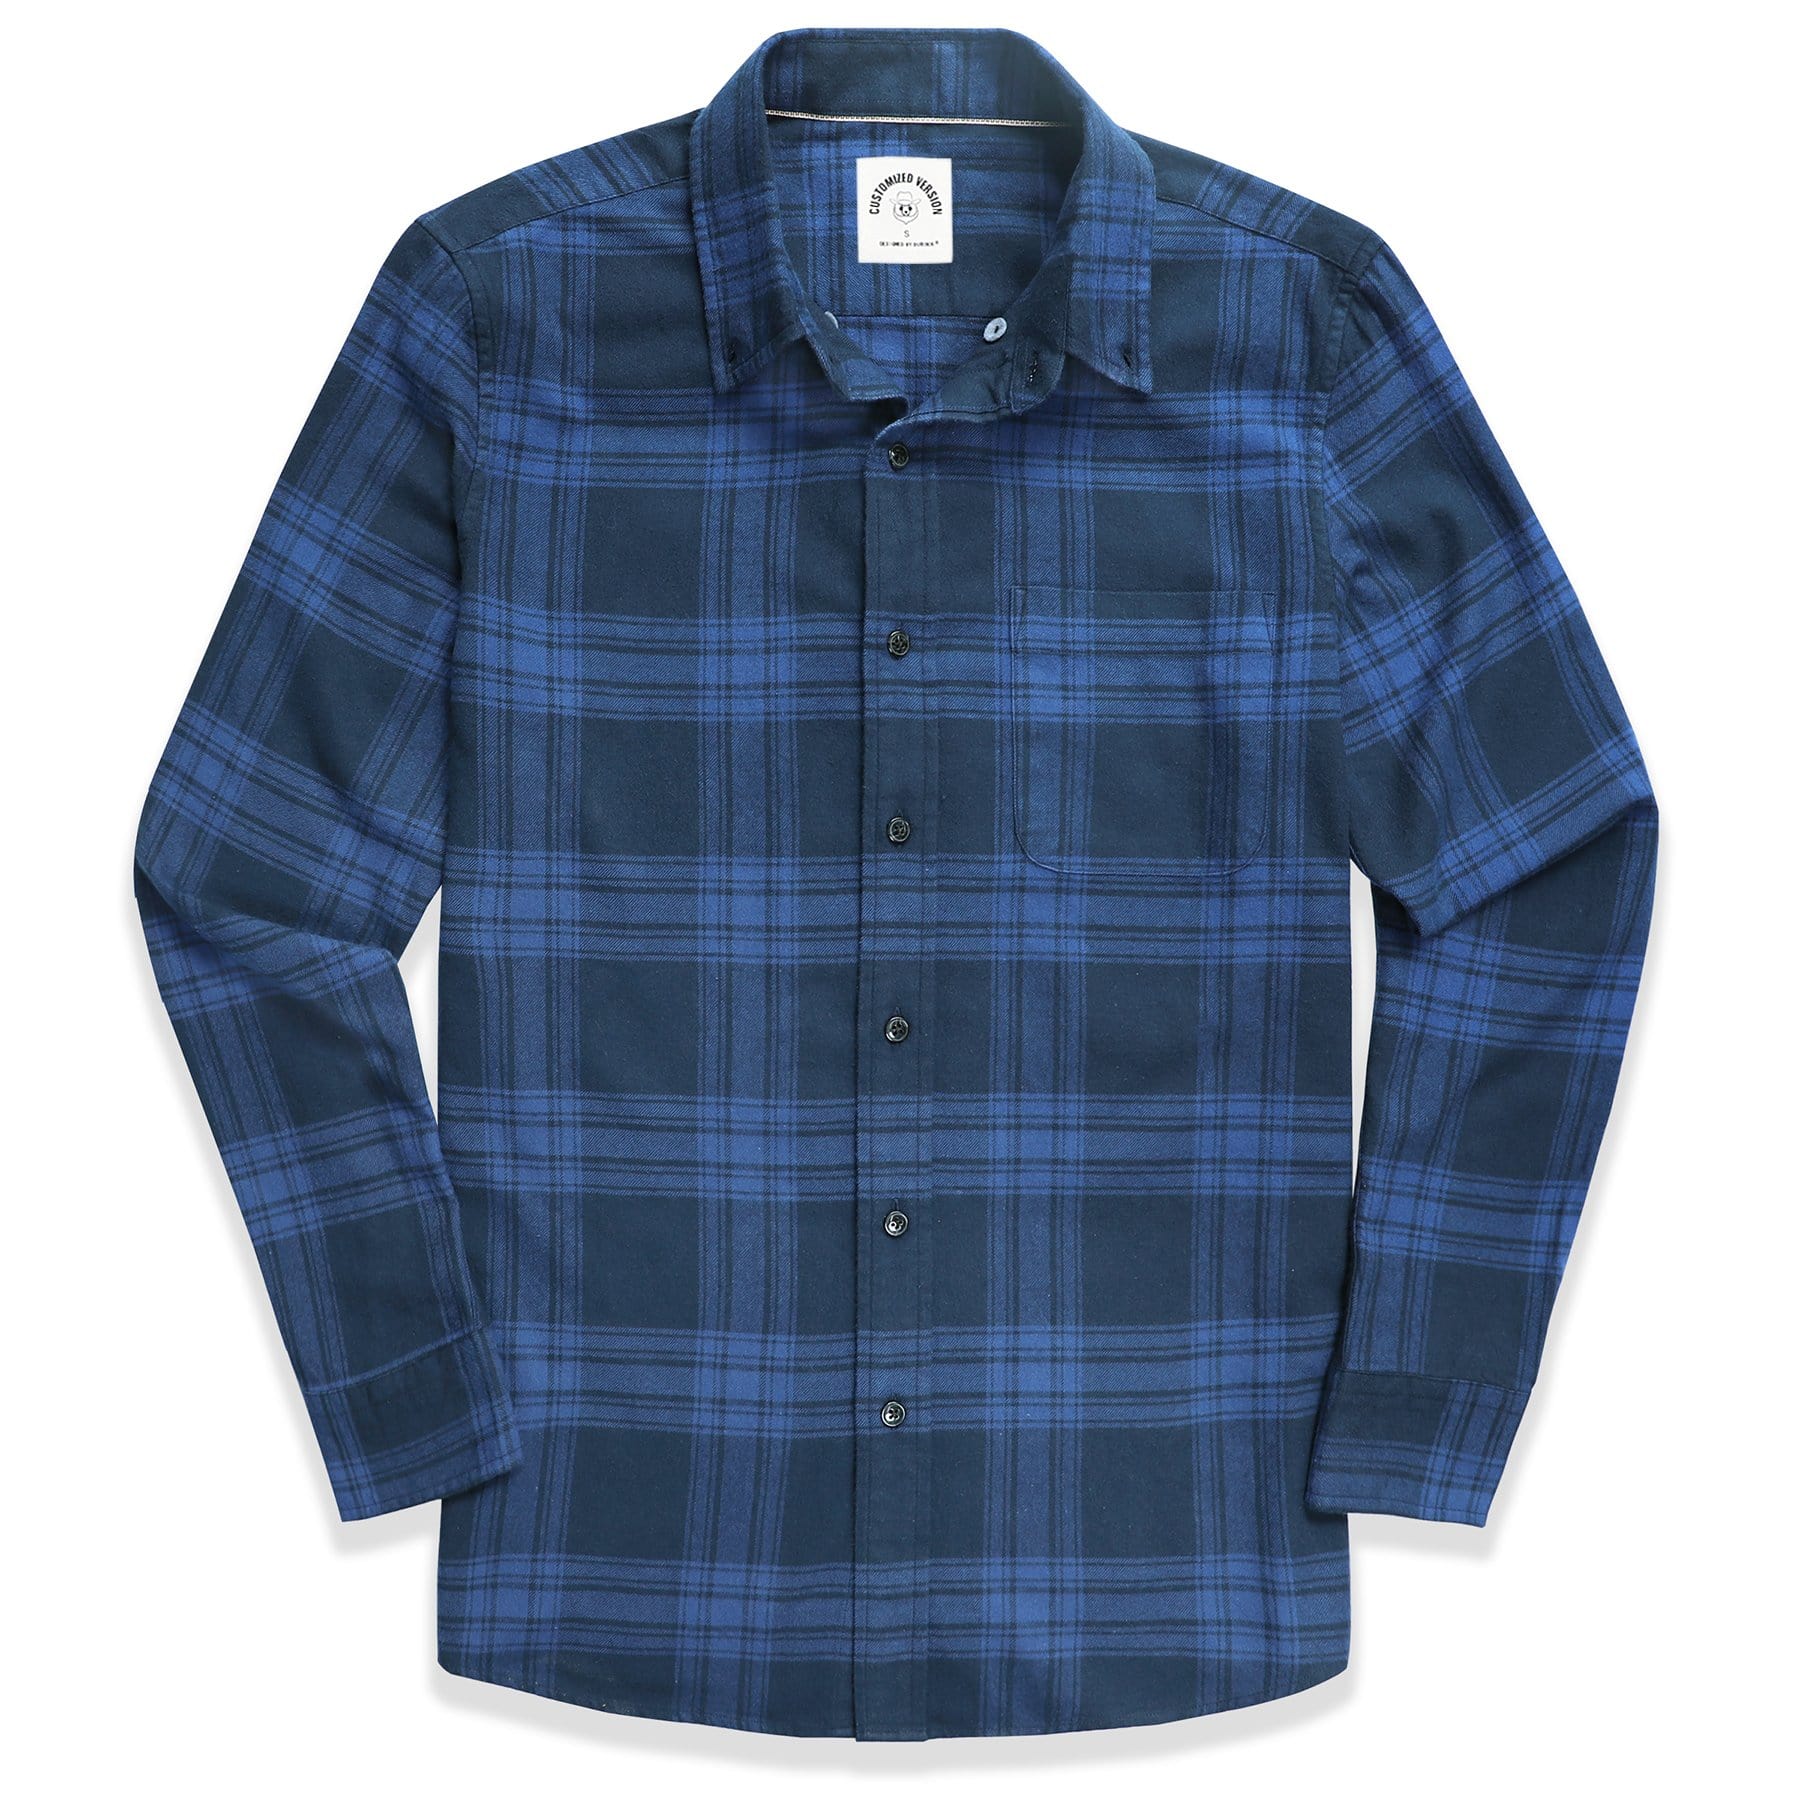 Men's Plaid Flannel Long Sleeve Shirts #0309